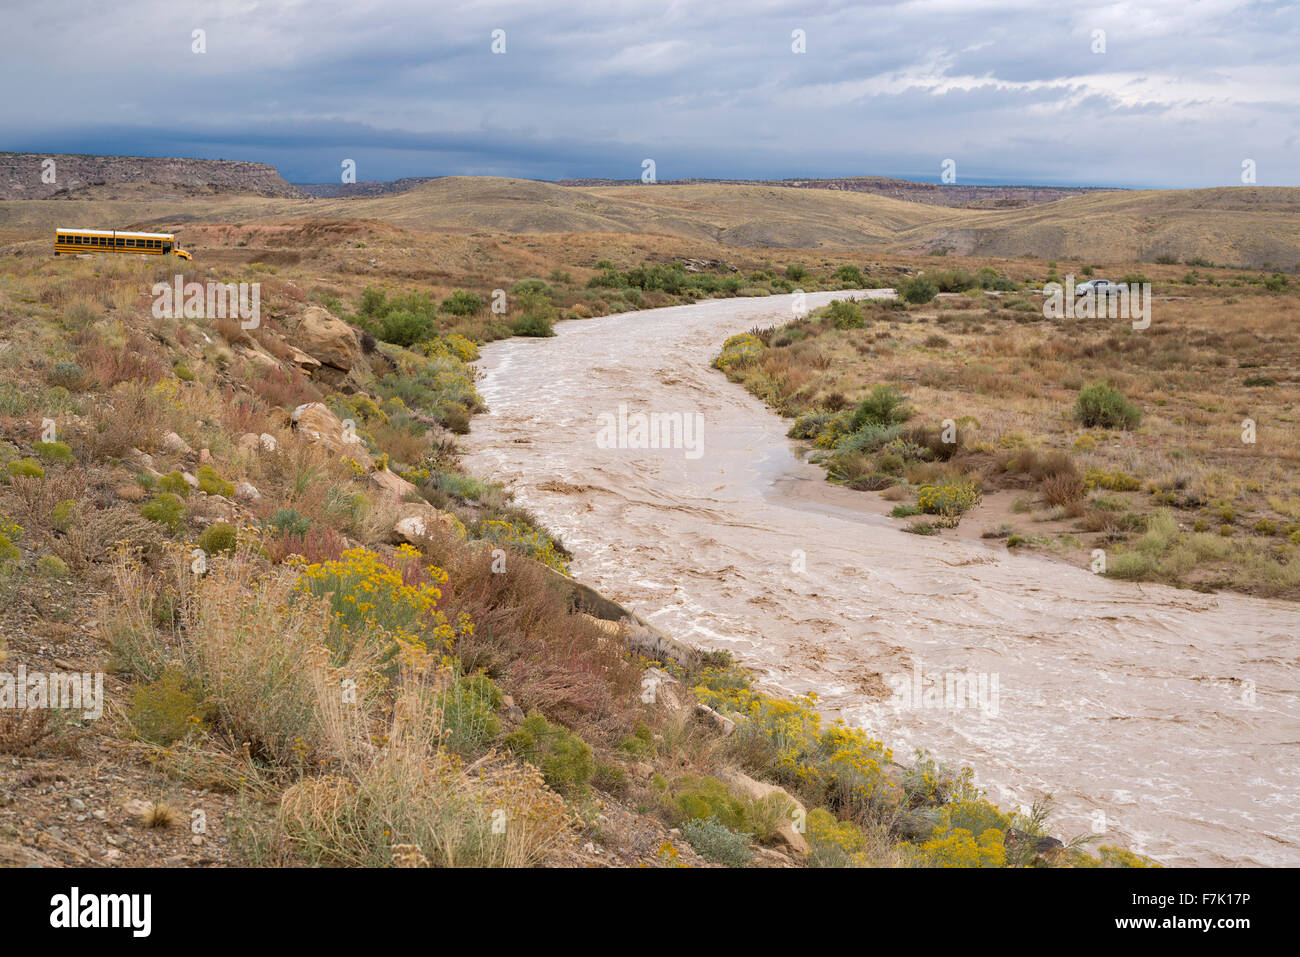 School bus and truck unable to cross Monezuma Creek in flood, Navajo Nation, Utah. Stock Photo